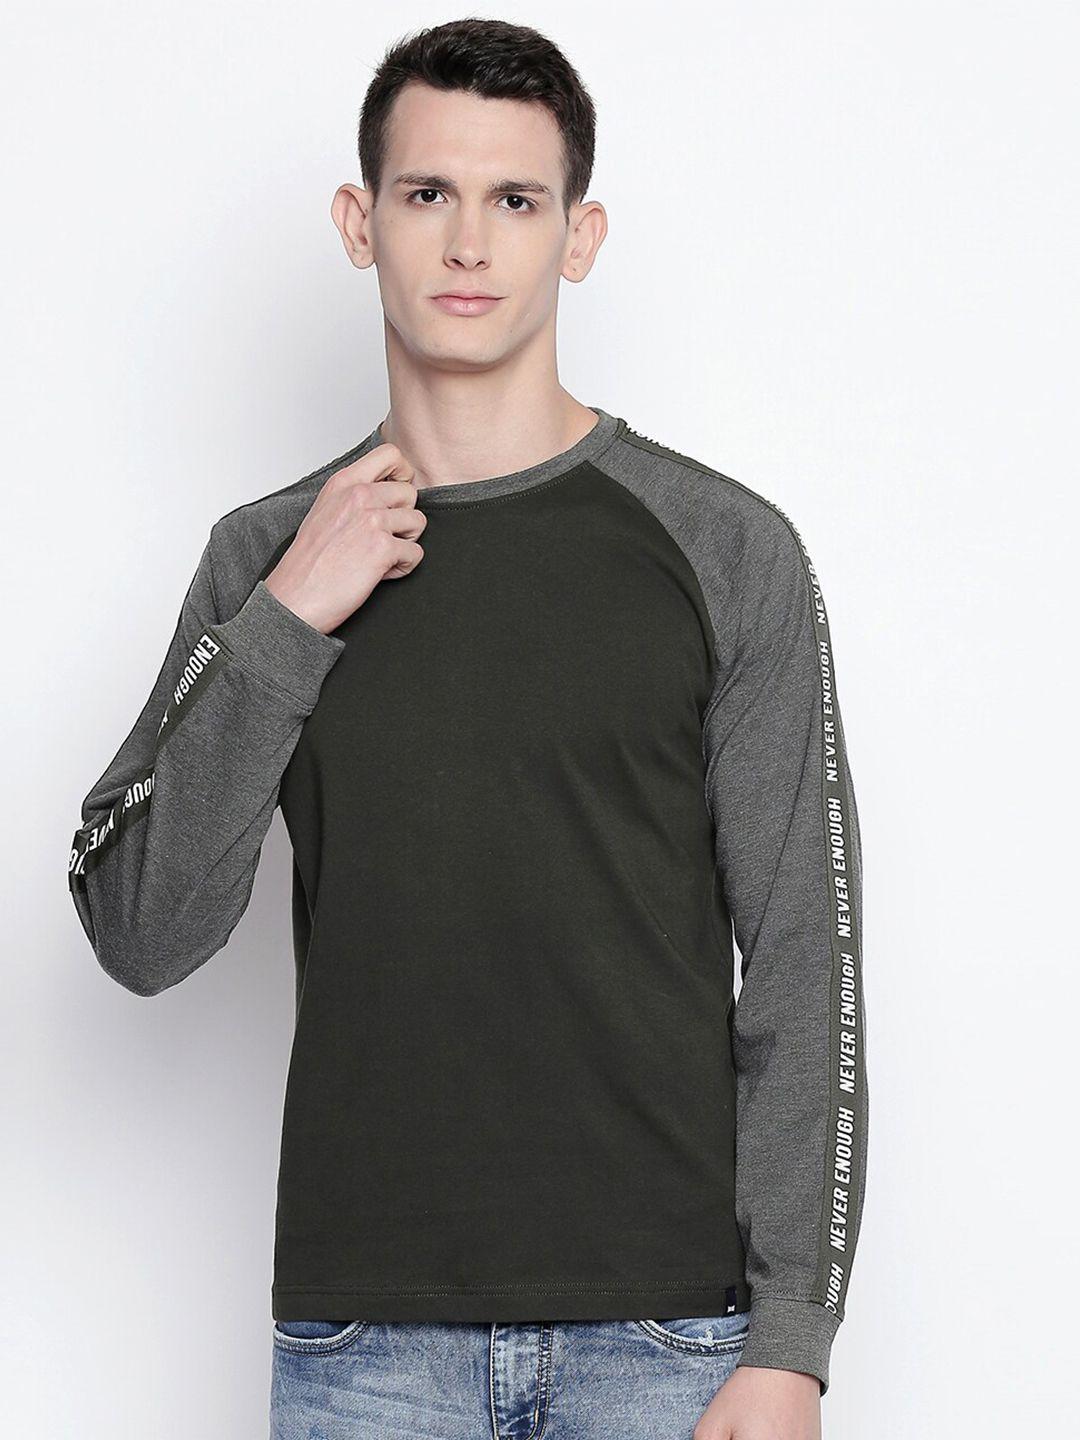 basics men green & grey colourblocked slim fit cotton t-shirt